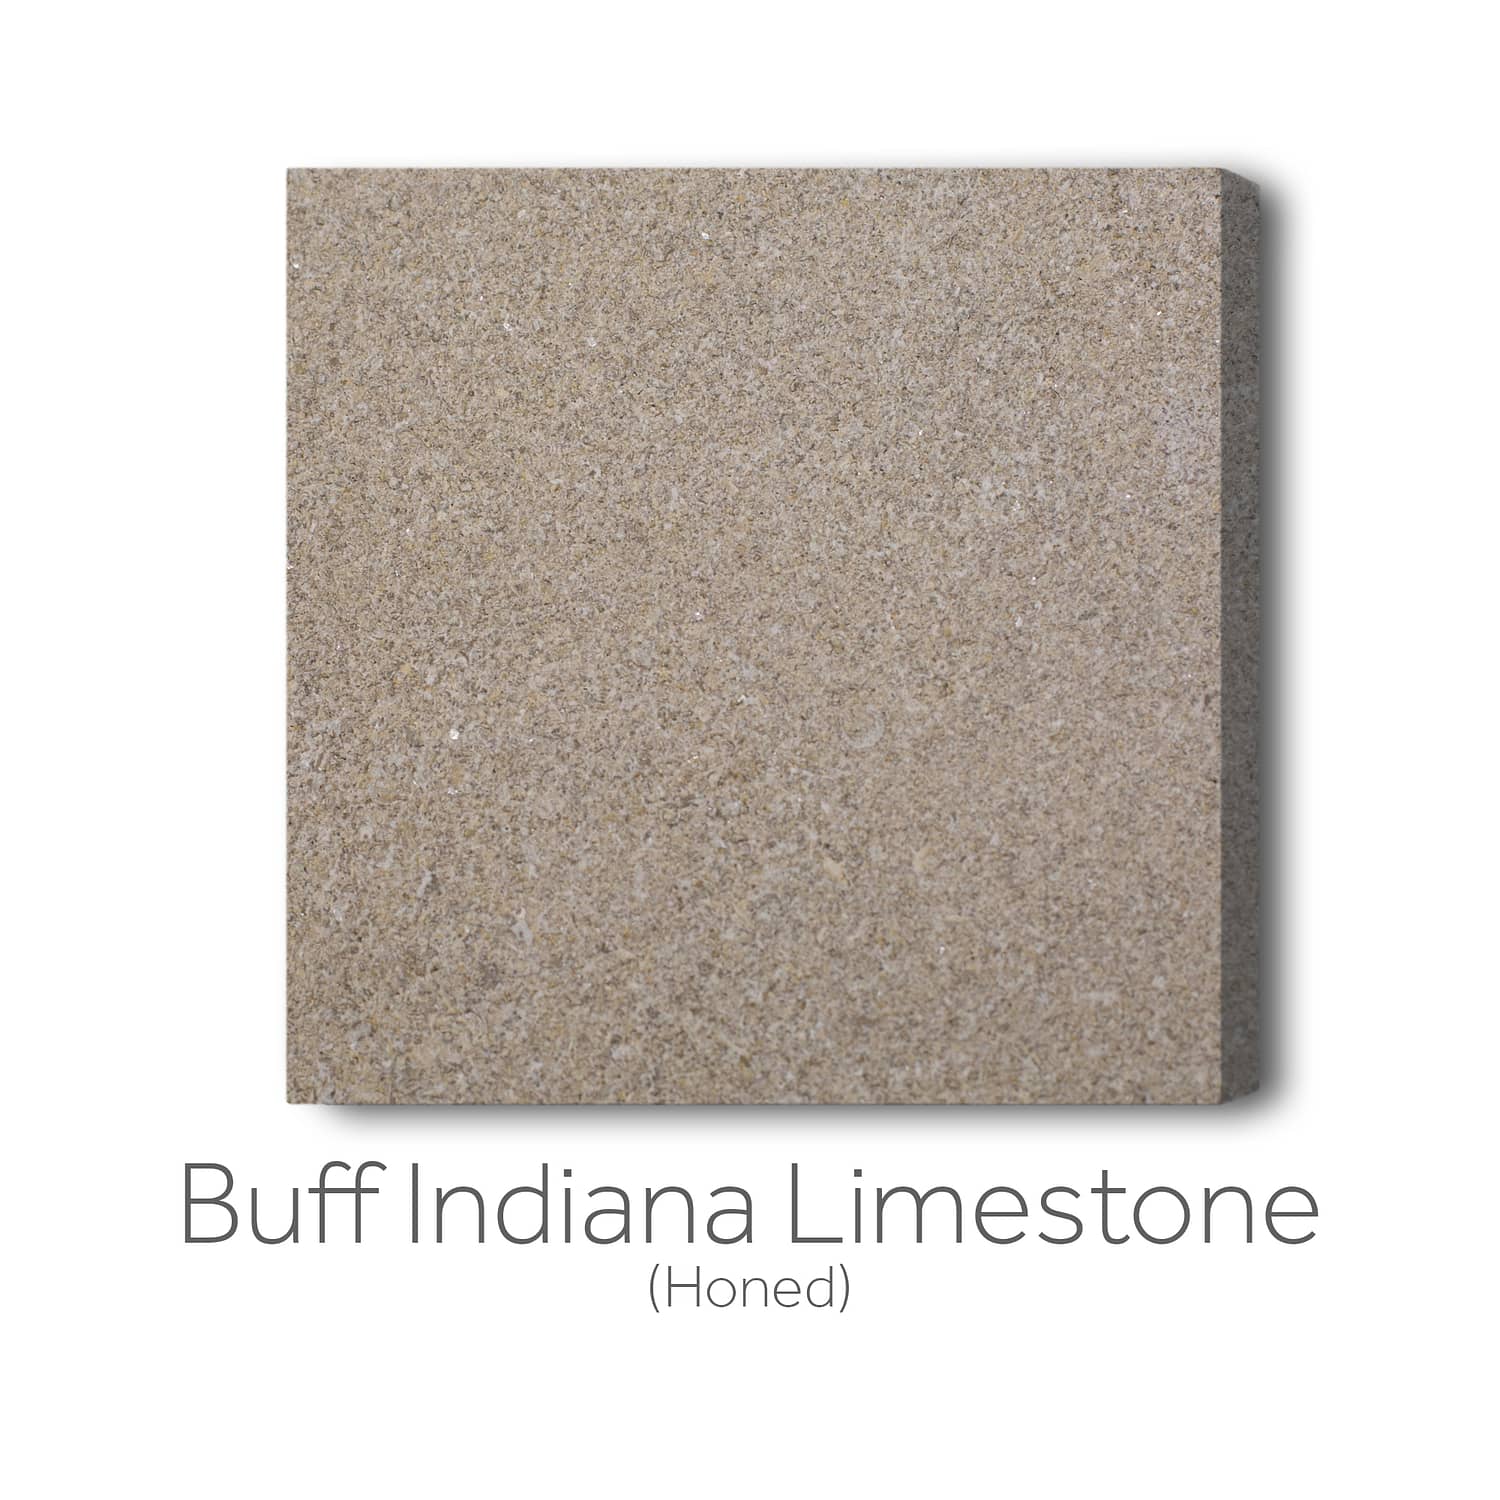 Buff Indian Limestone (Honed)